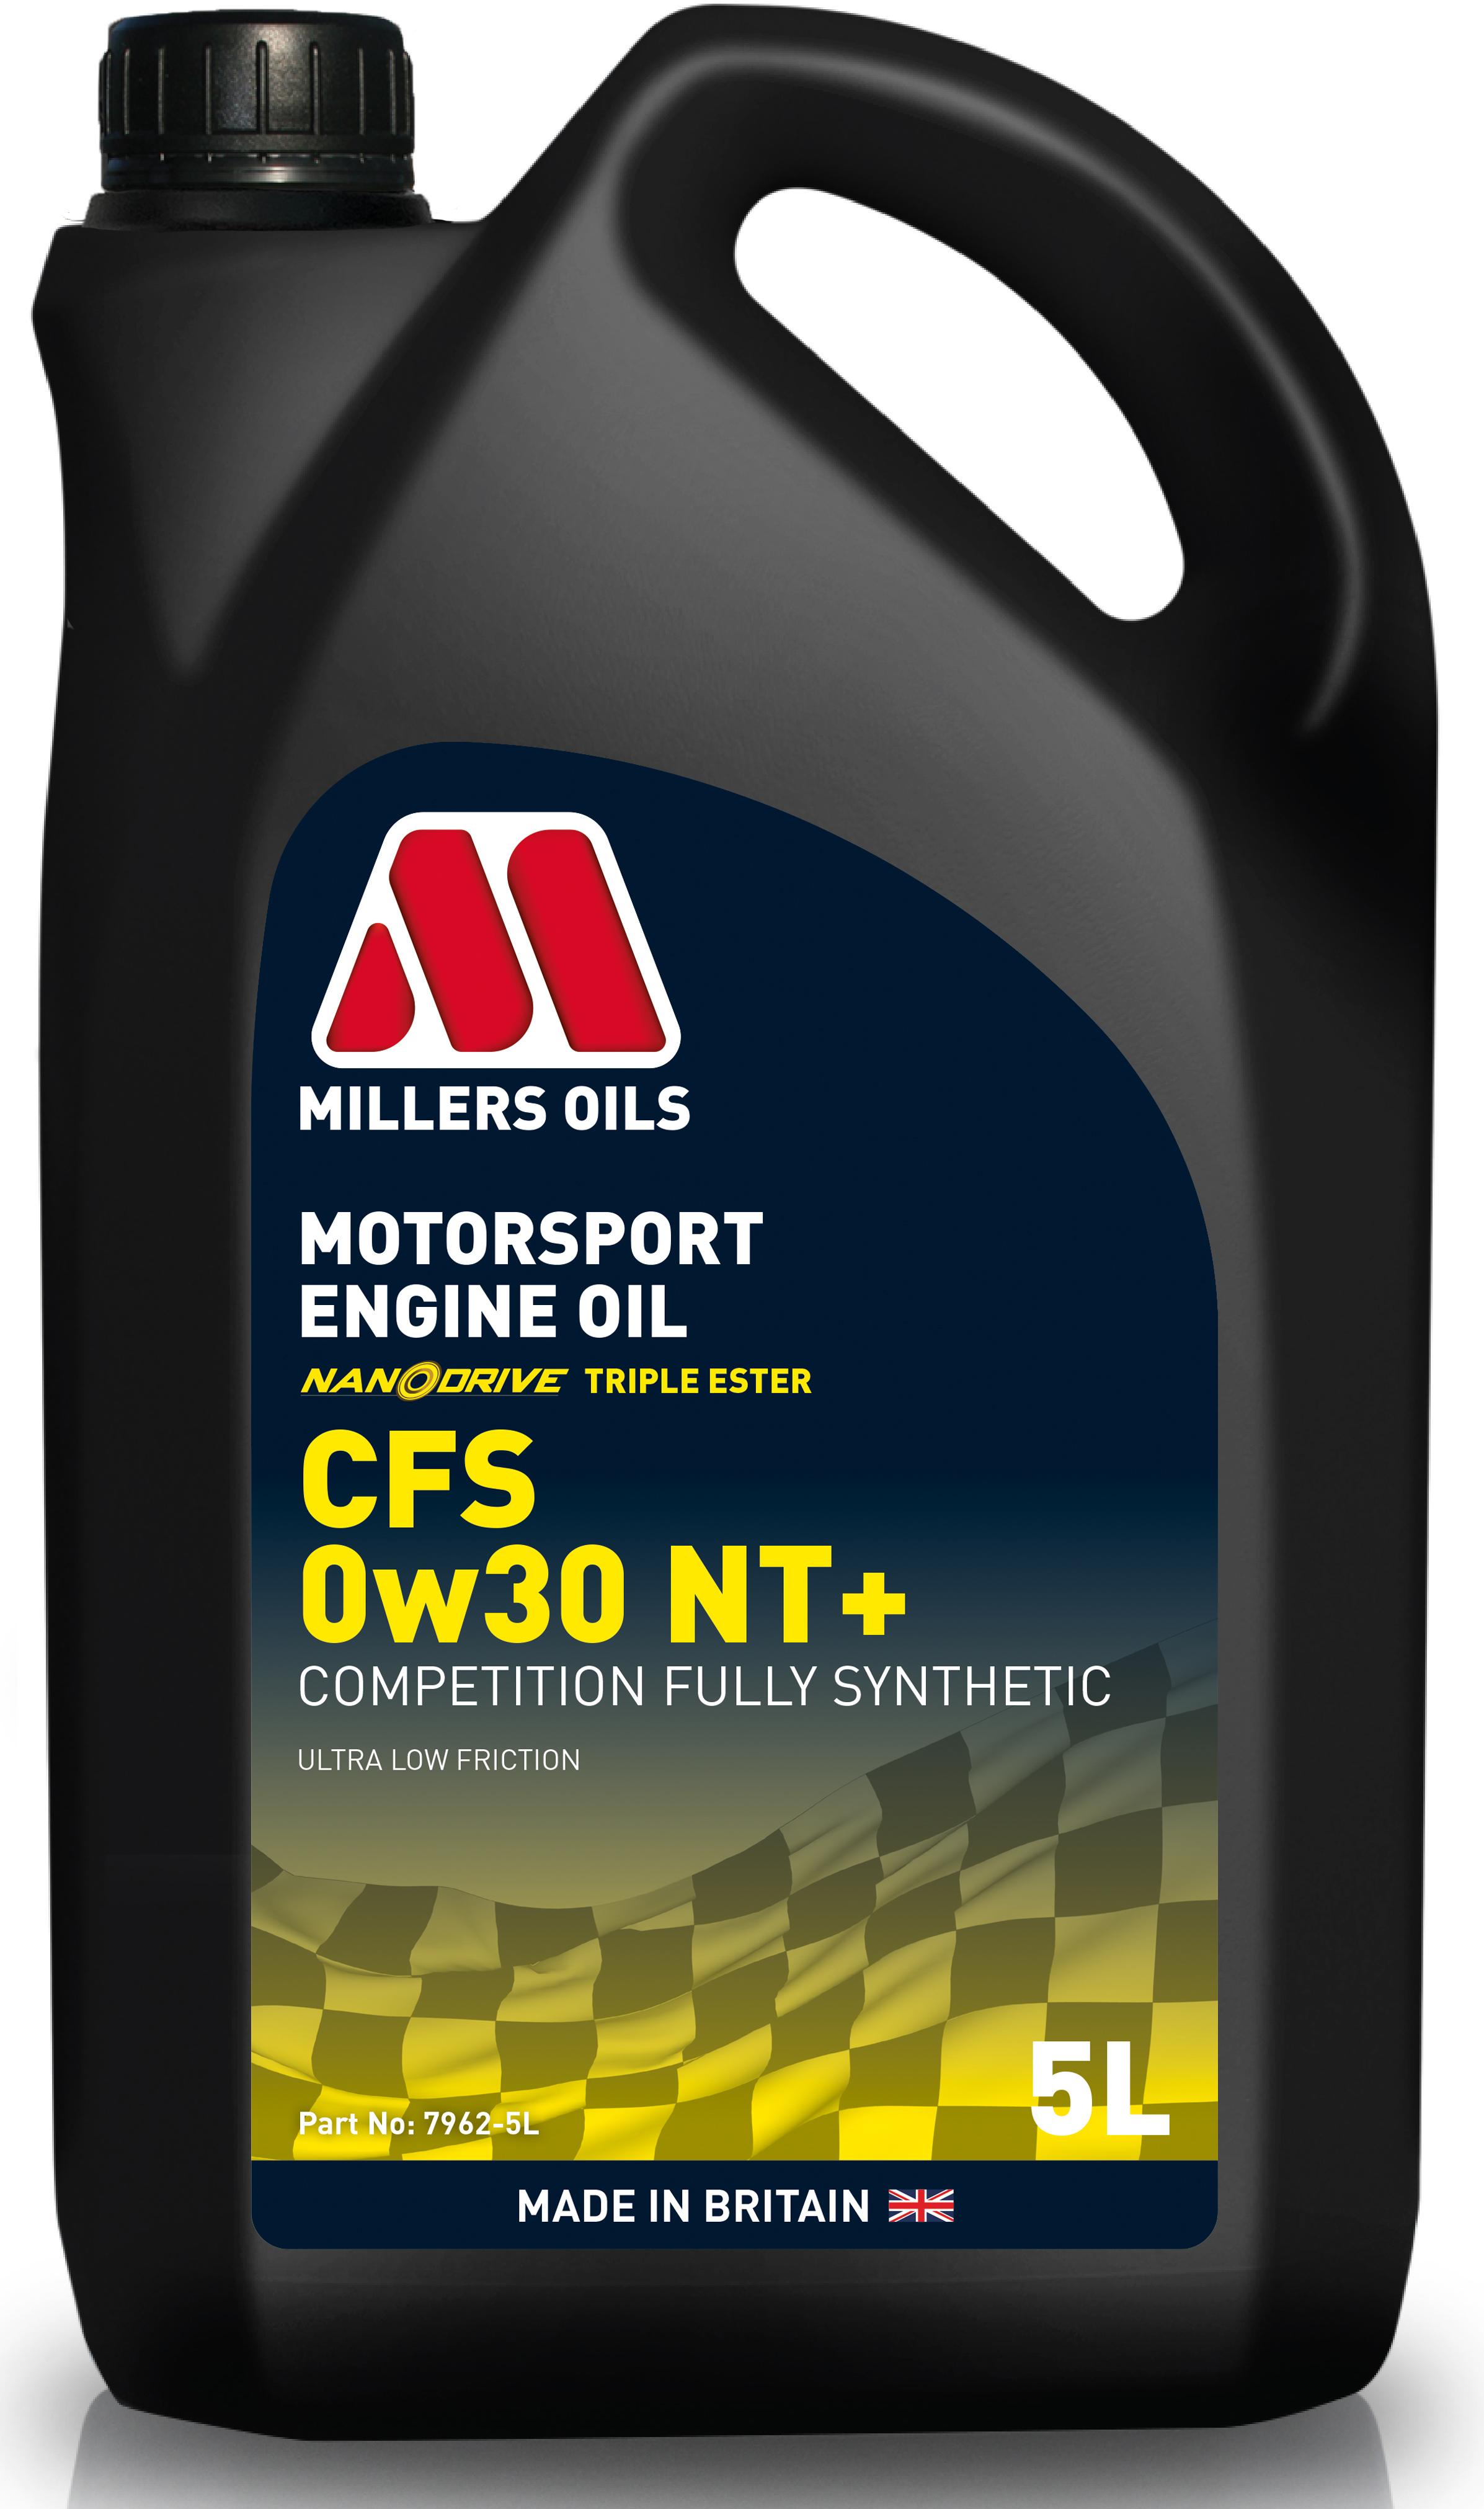 Millers Oils Cfs 0W30 Nt+ Motorsport Engine Oil - 5L